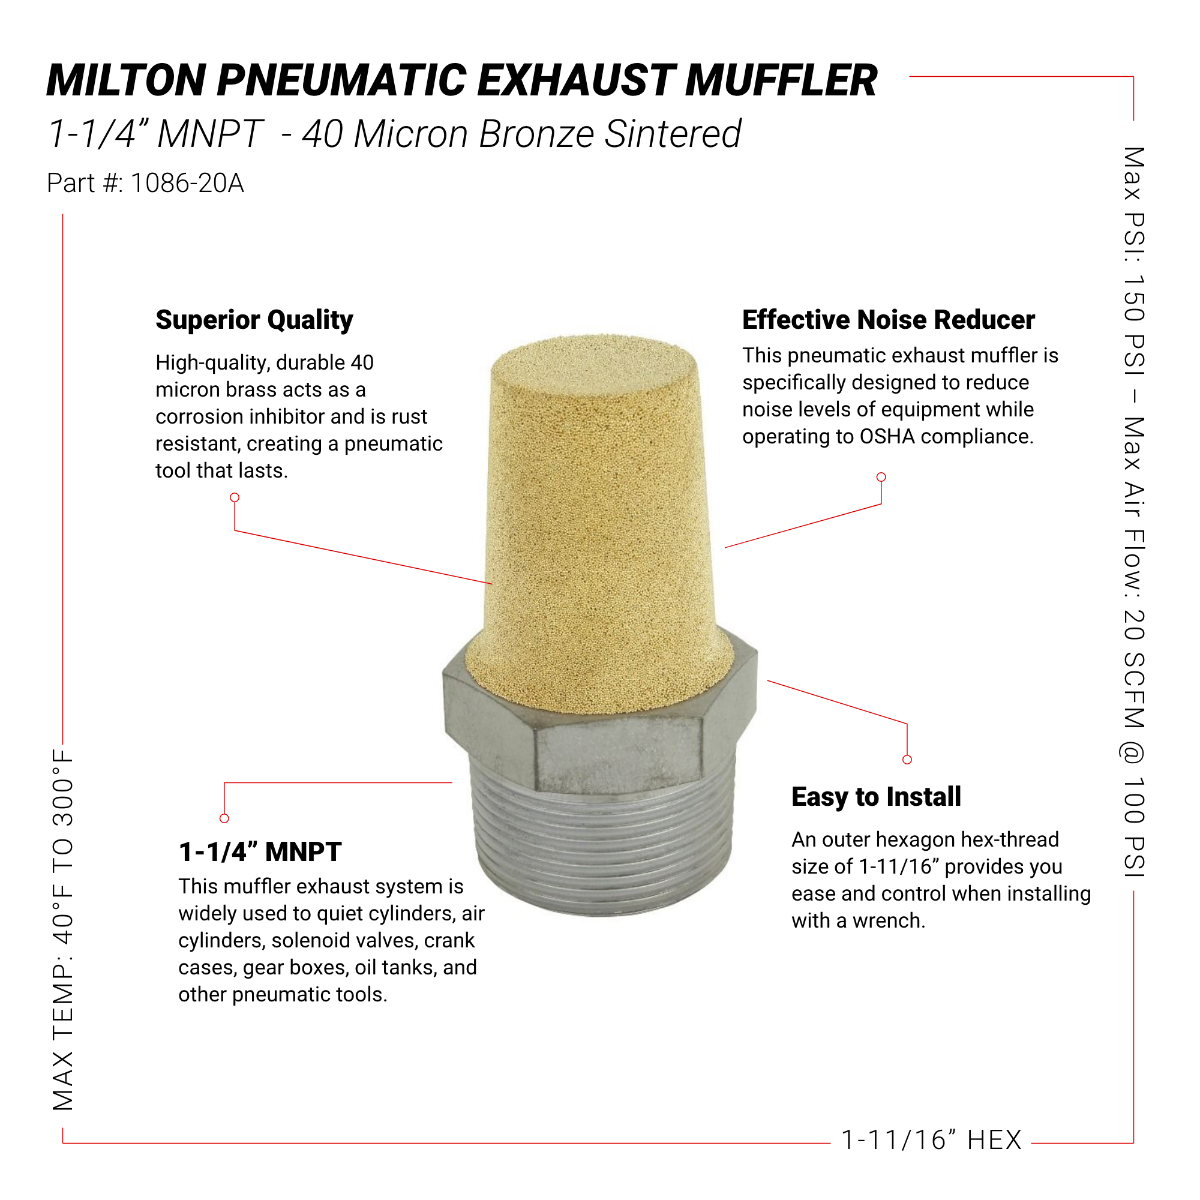 Pneumatic Exhaust Muffler, 1 1/4” MNPT 40 Micron Sintered Bronze Silencer/Diffuse air & Noise Reducer